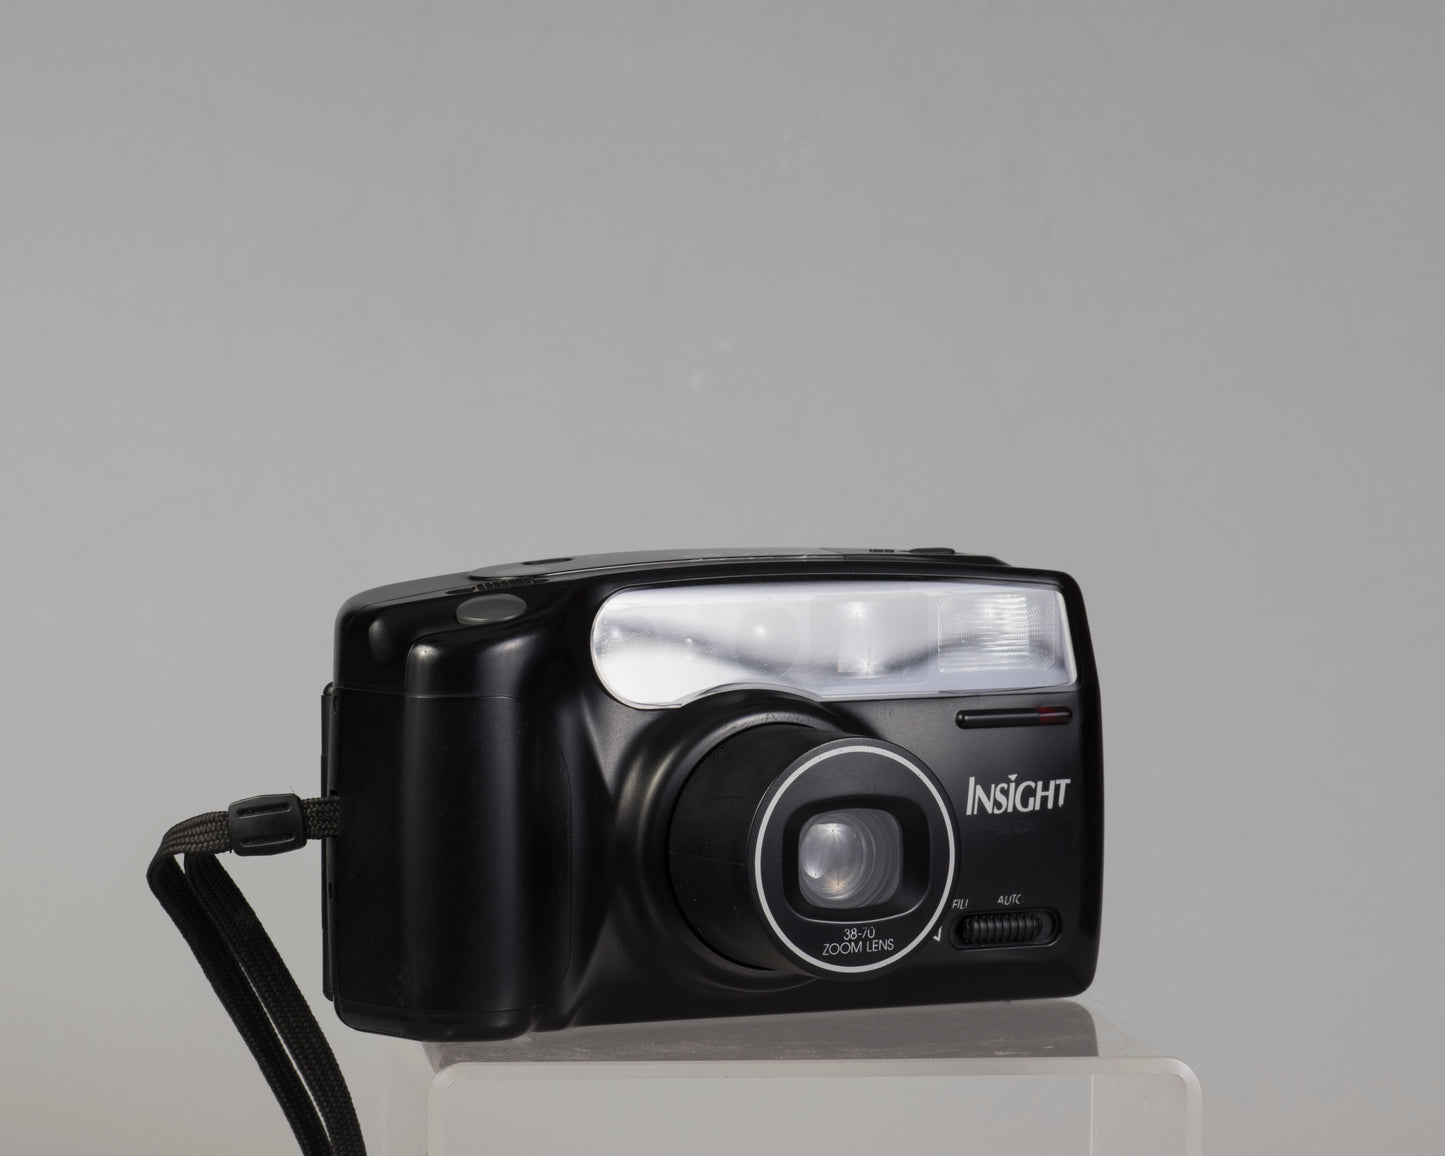 Insight Zoom 70 (aka Vivitar Series 1 PZ440) 35mm film camera